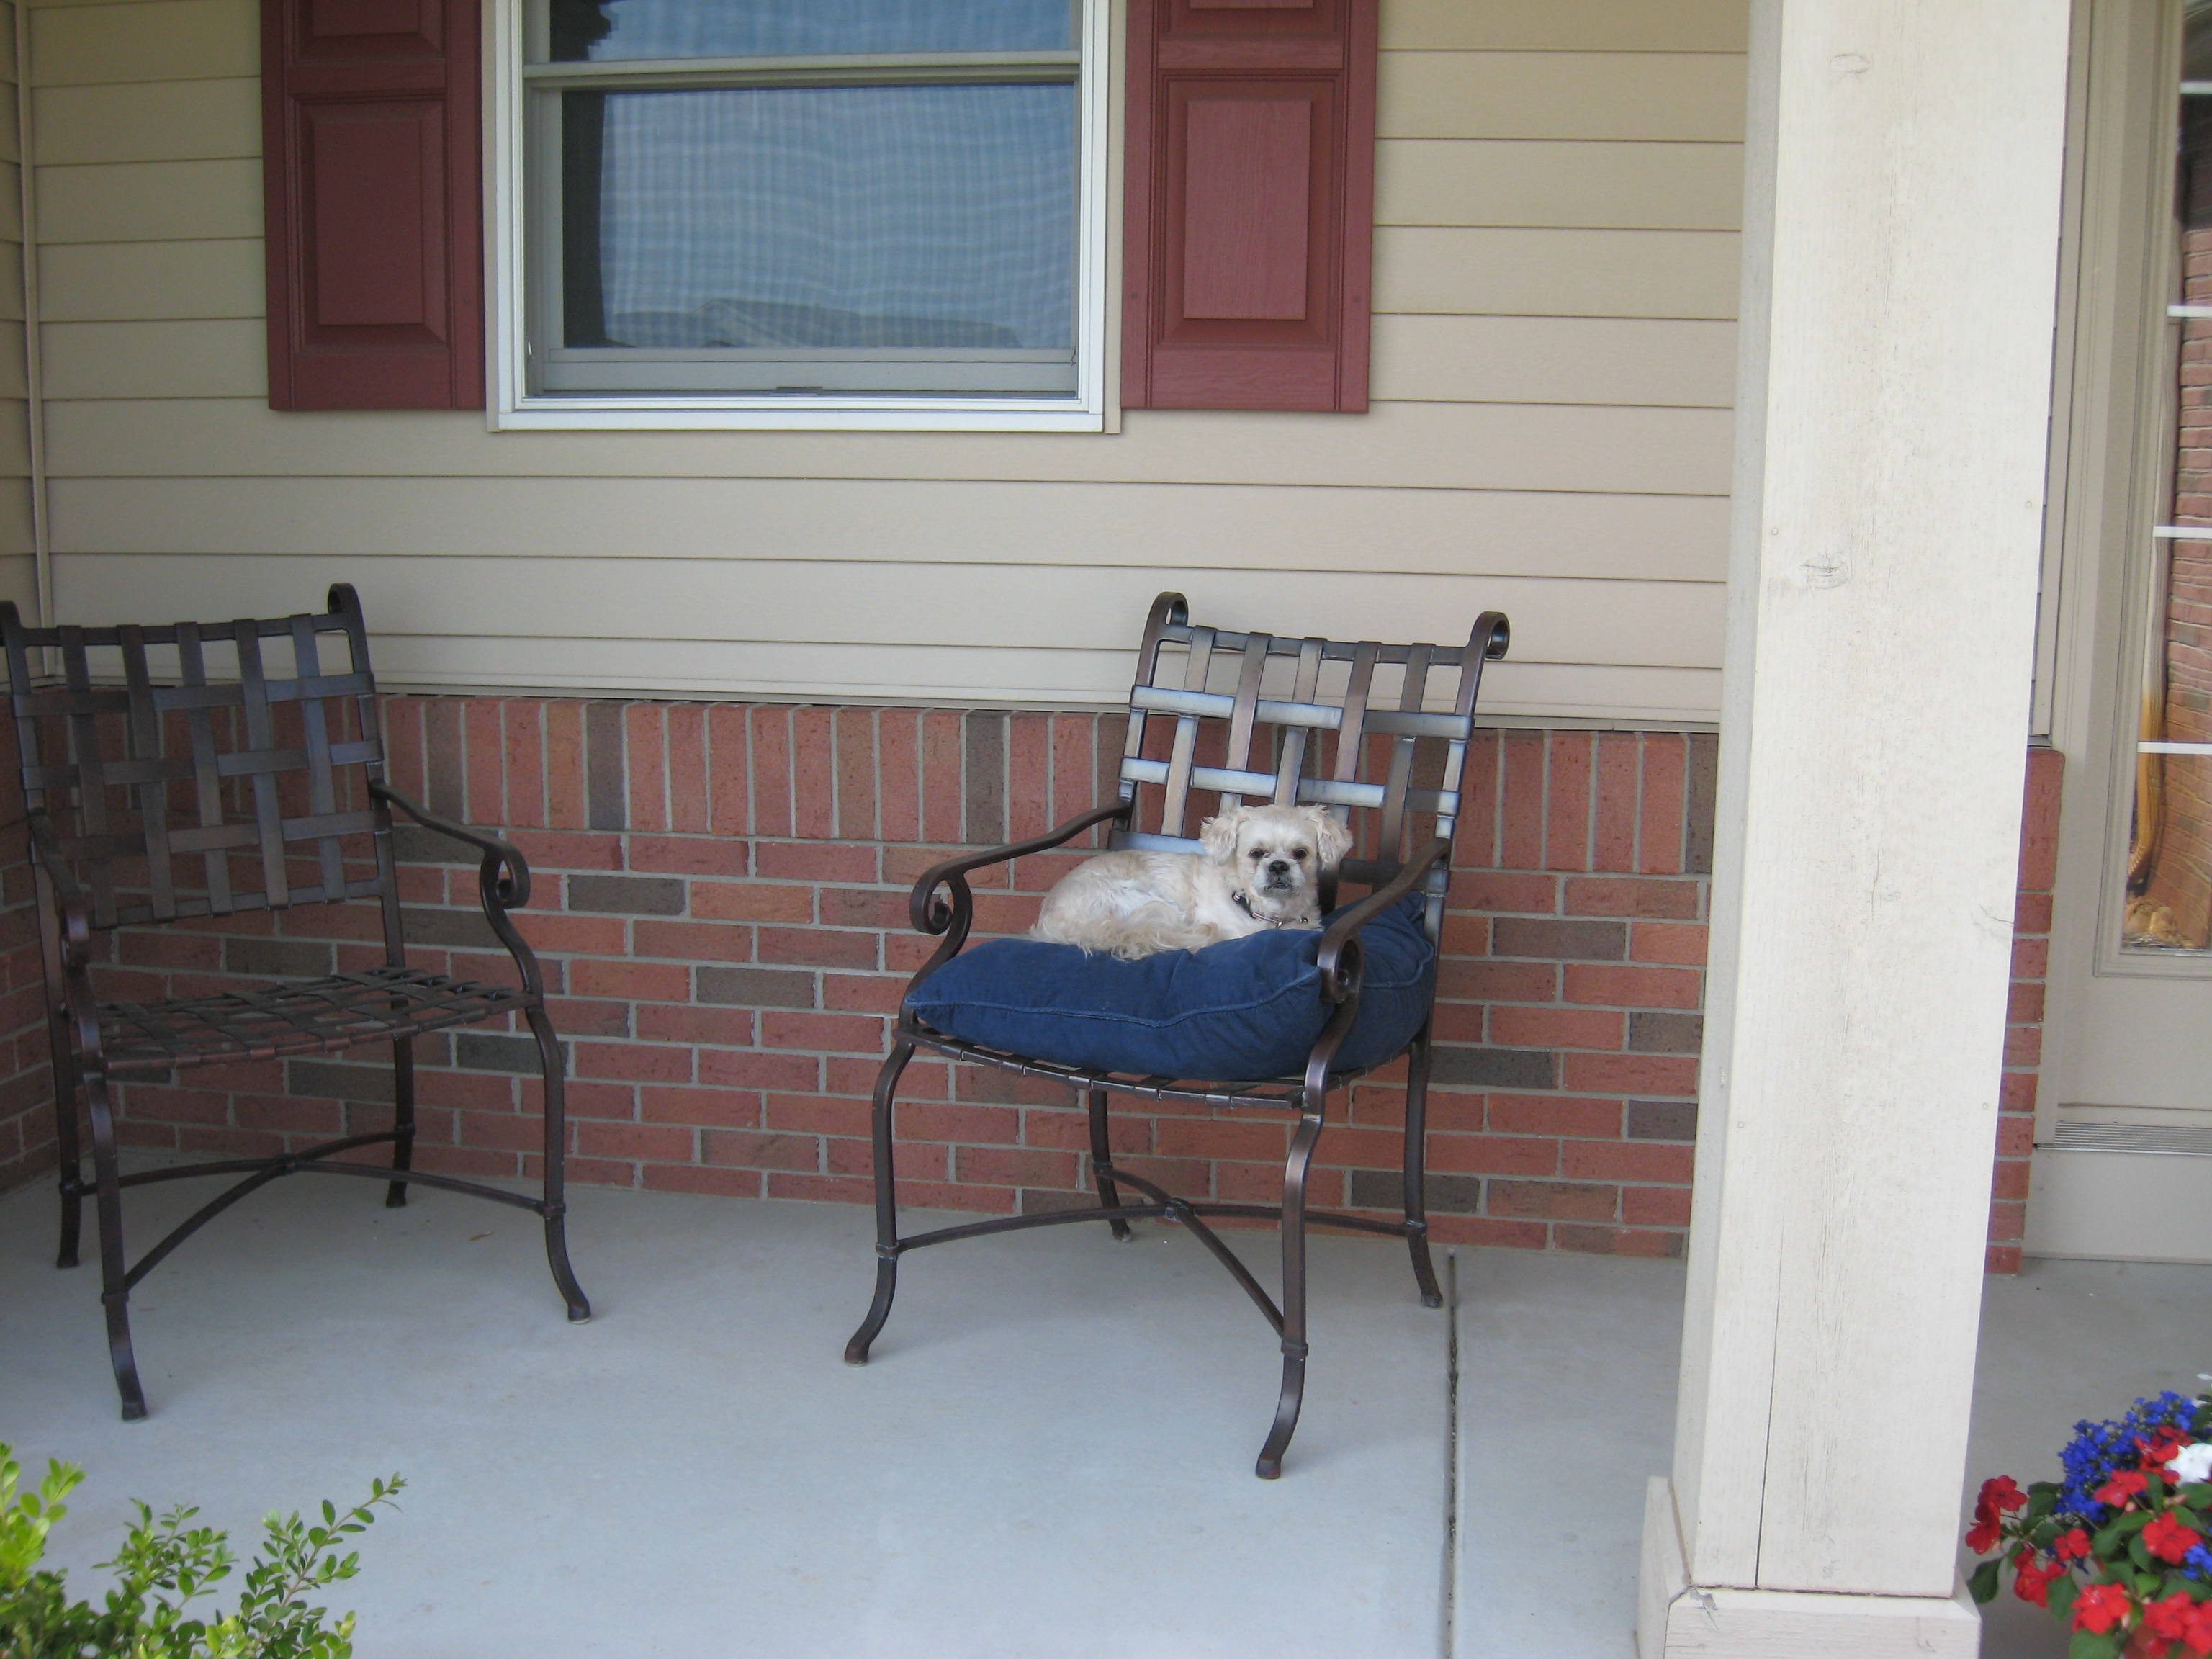 berkeley on the porch